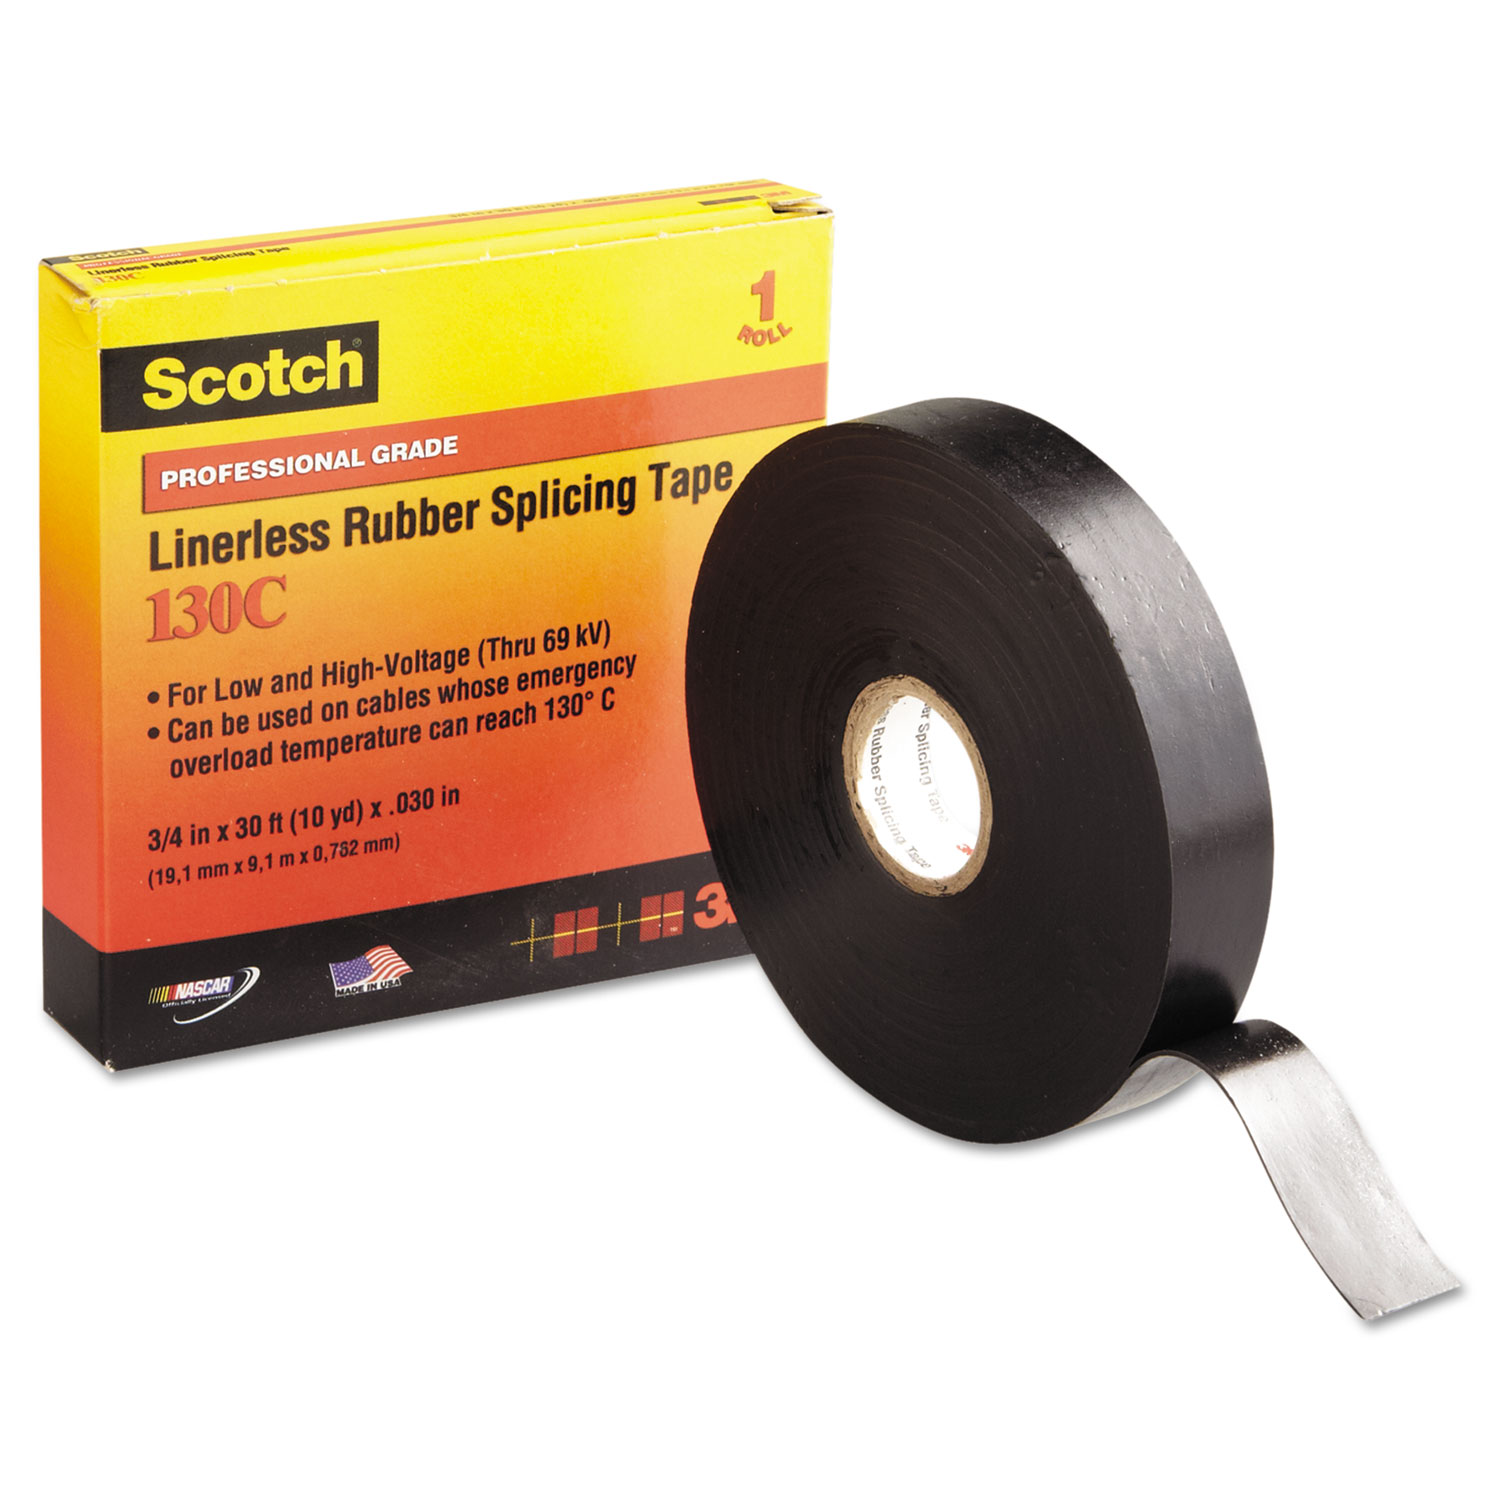 Scotch 130C Linerless Splicing Tape, 3/4 x 30ft